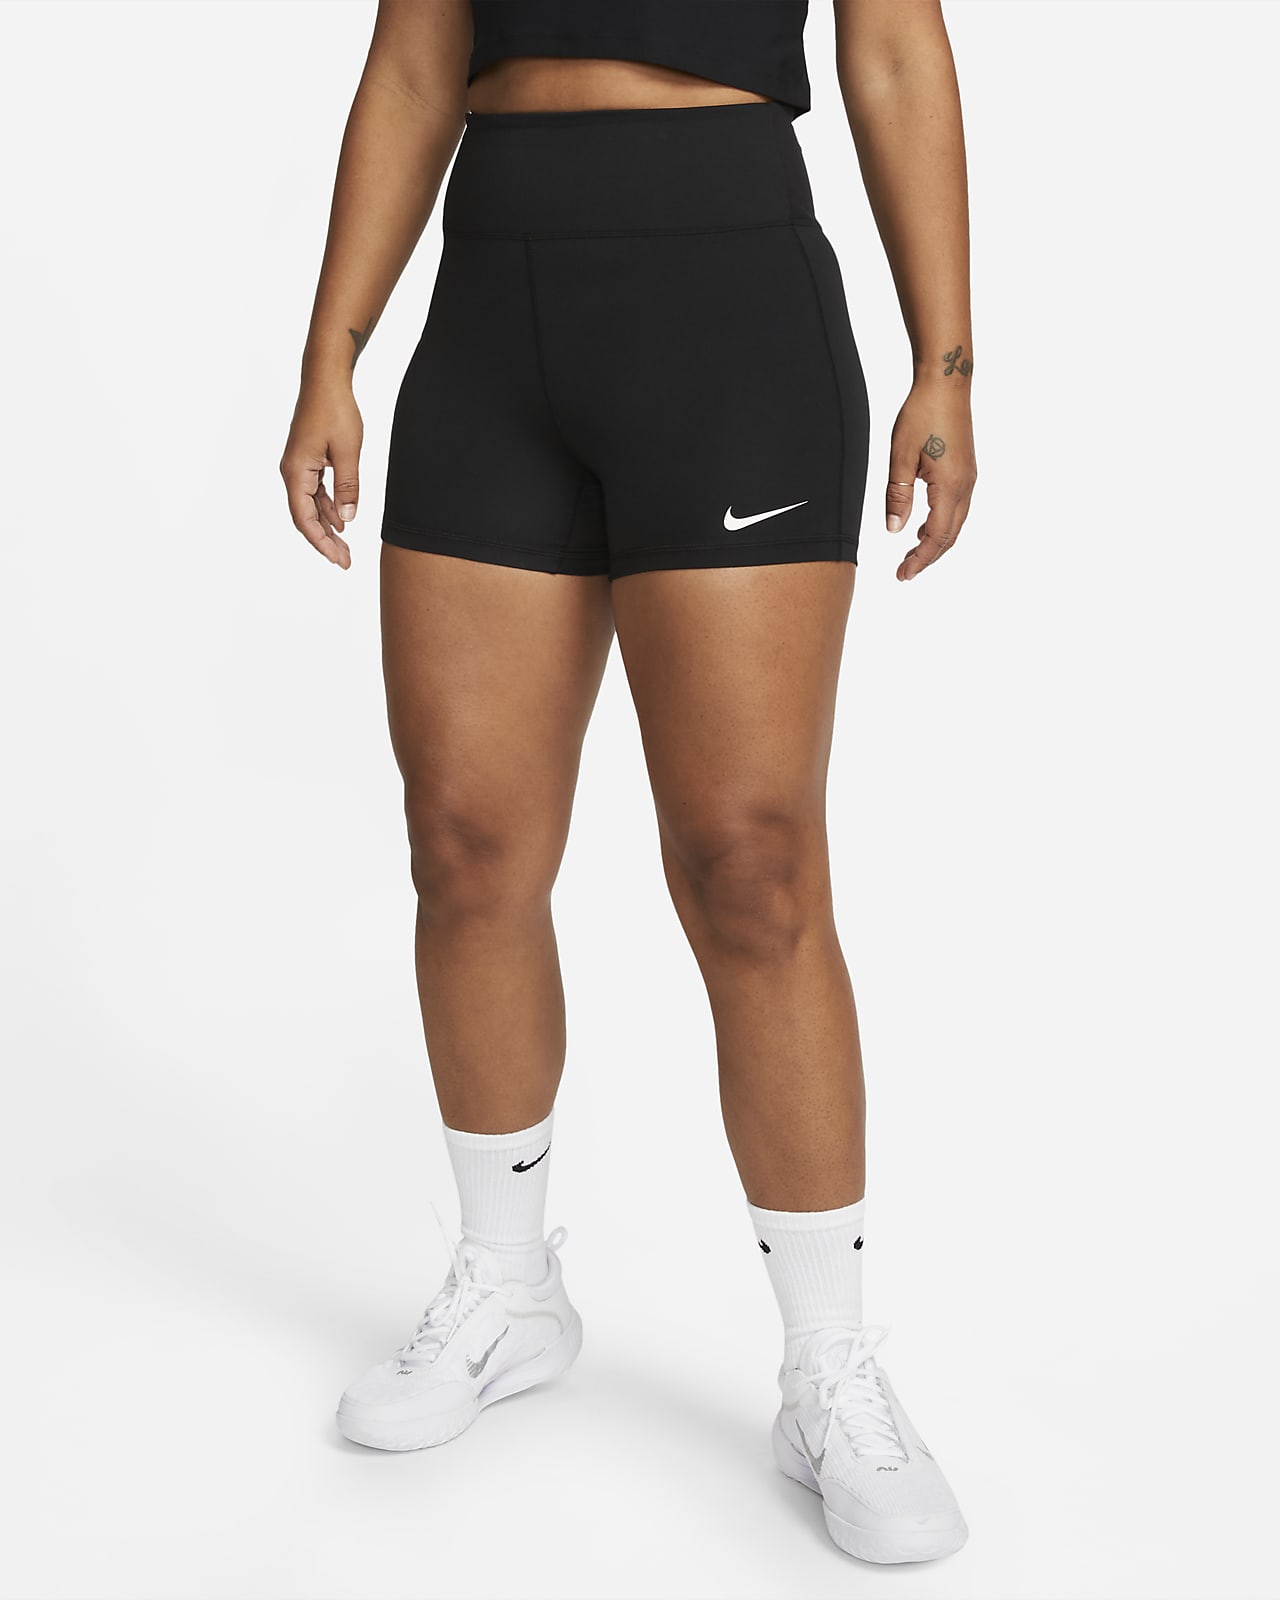 Nike Dri-FIT Advantage corto de tenis 10 cm y talle alto - Mujer. Nike ES